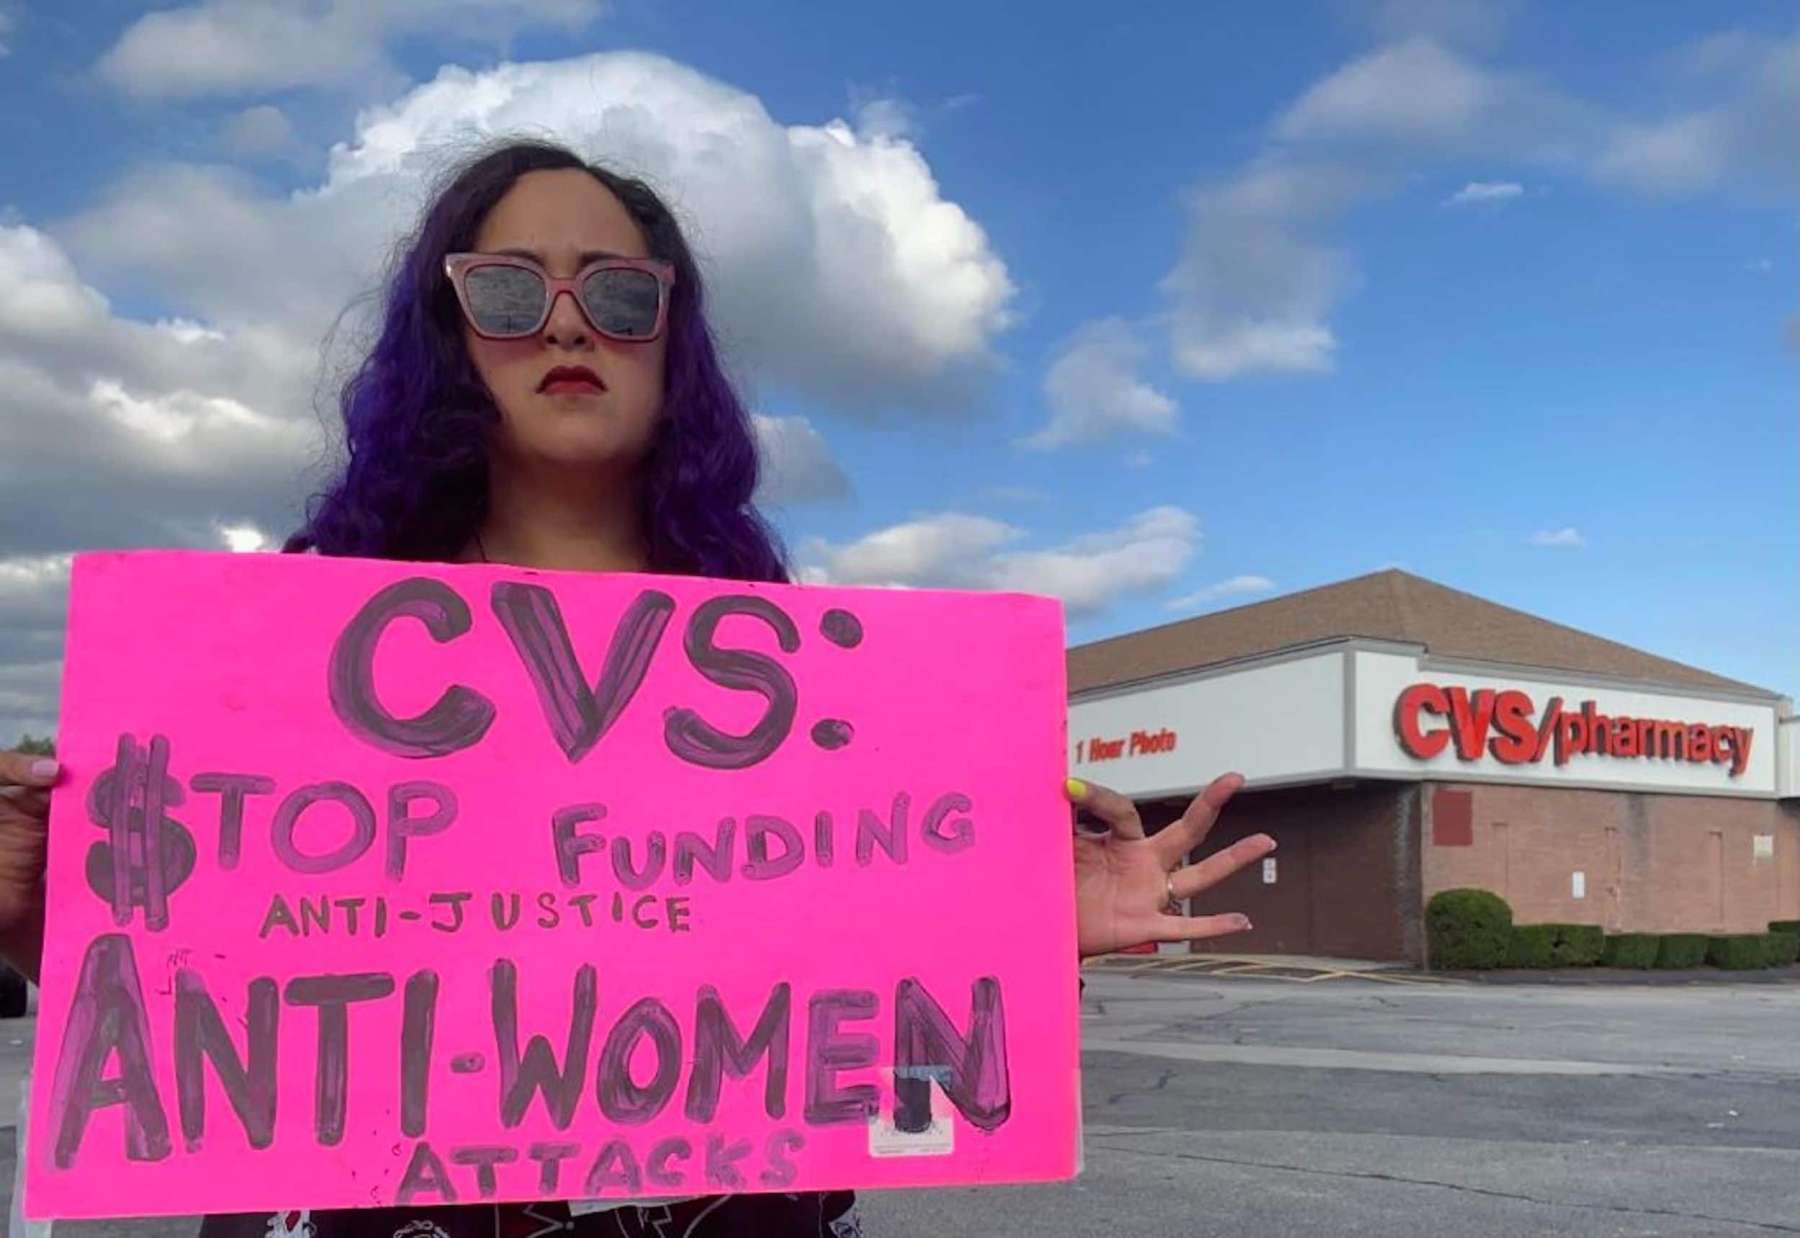 Rhode Island News: CVS funded anti-abortion Texas legislators – The Womxn Project calls for boycott